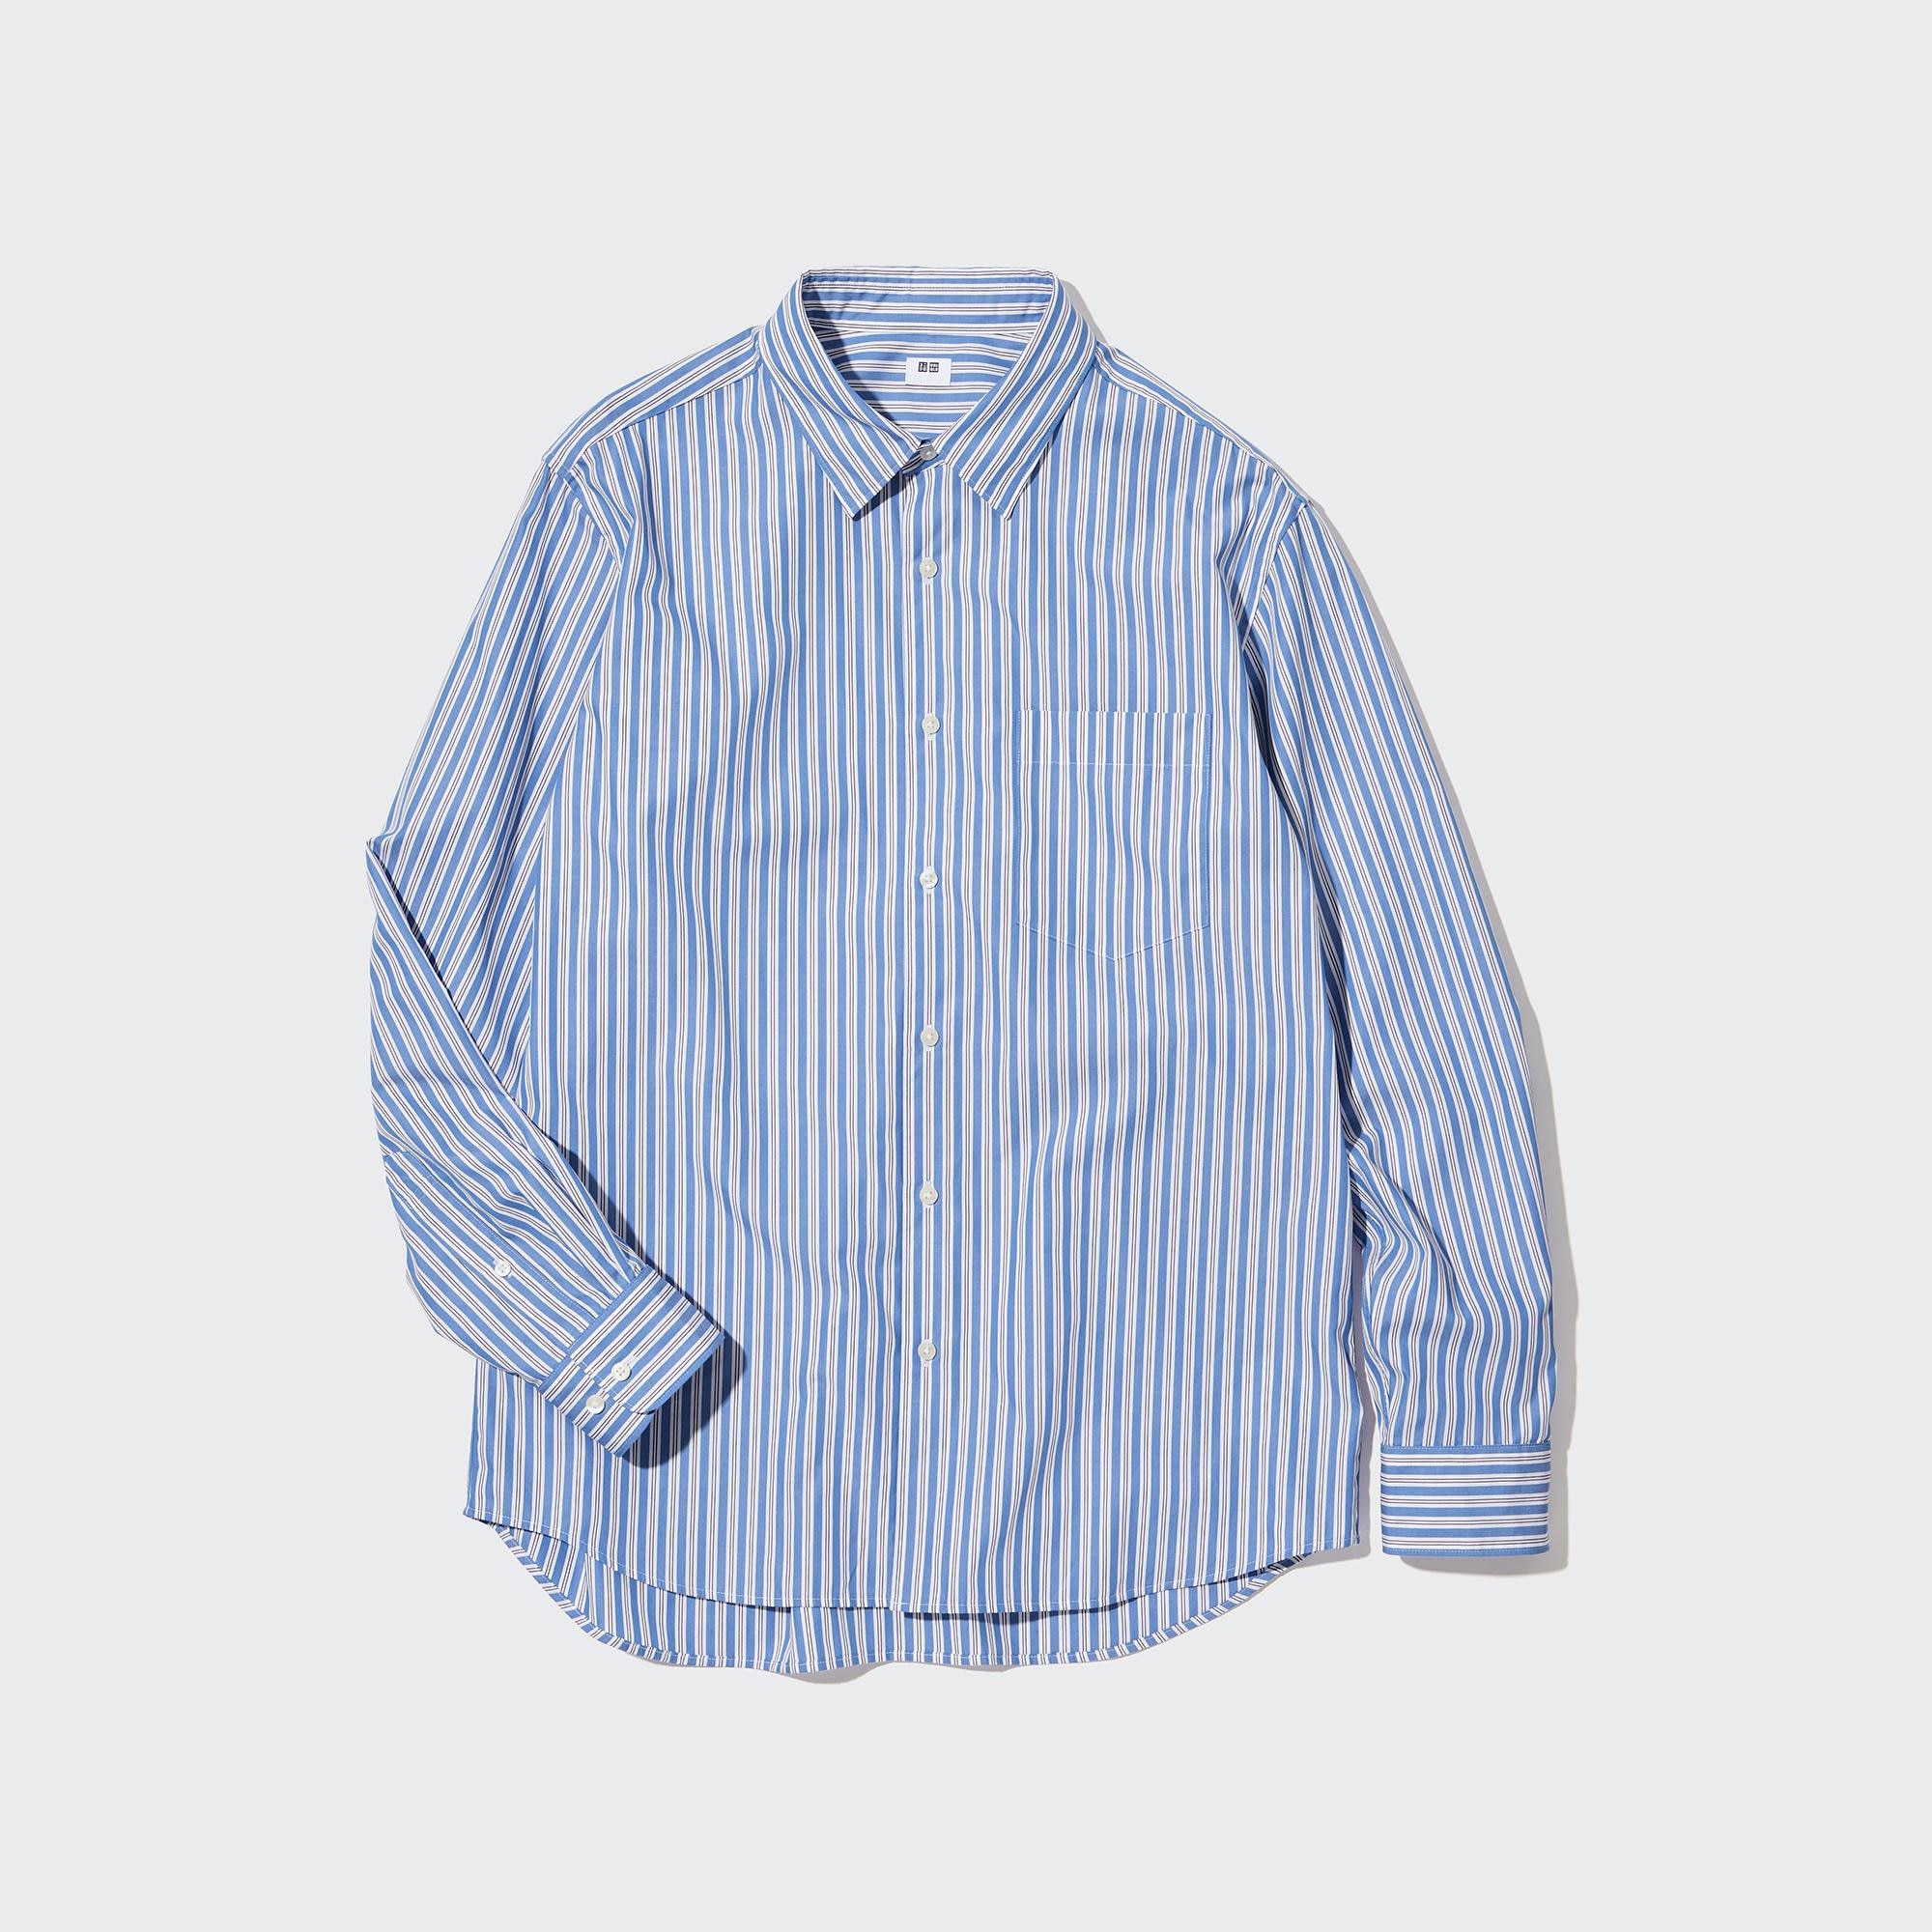 KIDS FASHION Shirts & T-shirts Ruffle NoName blouse Blue 10Y discount 69% 